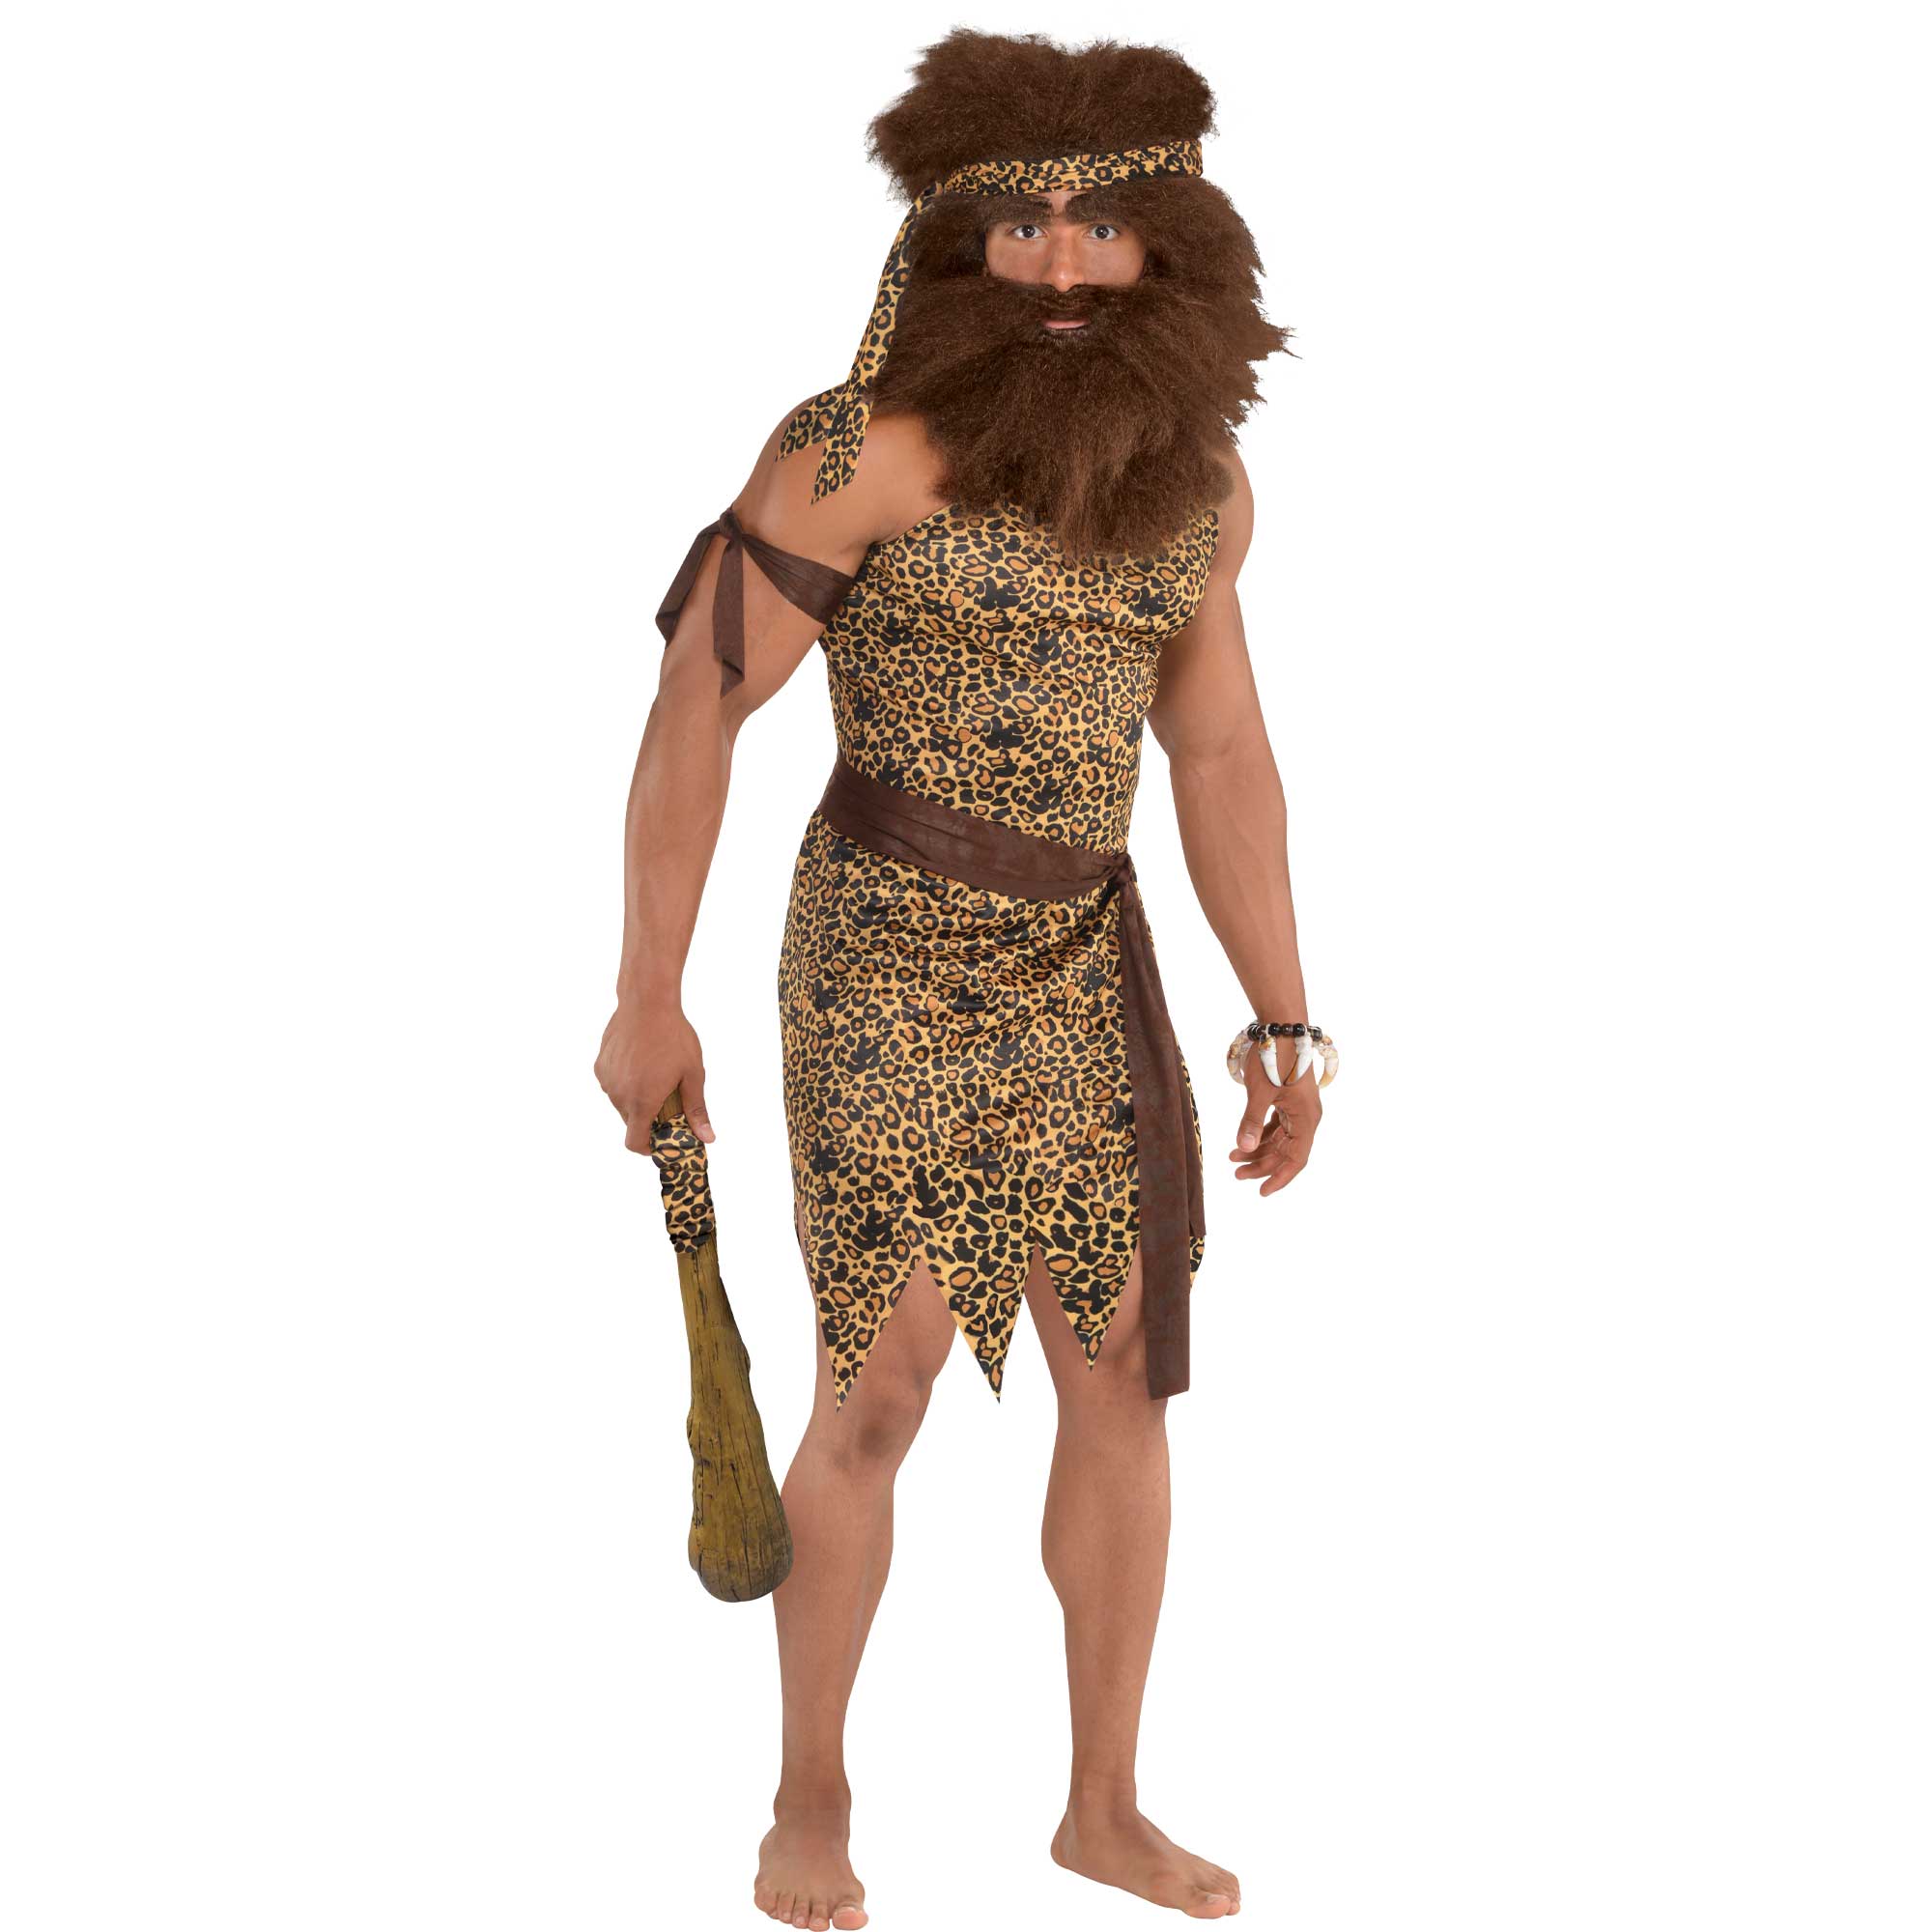 Costume Caveman - Adult